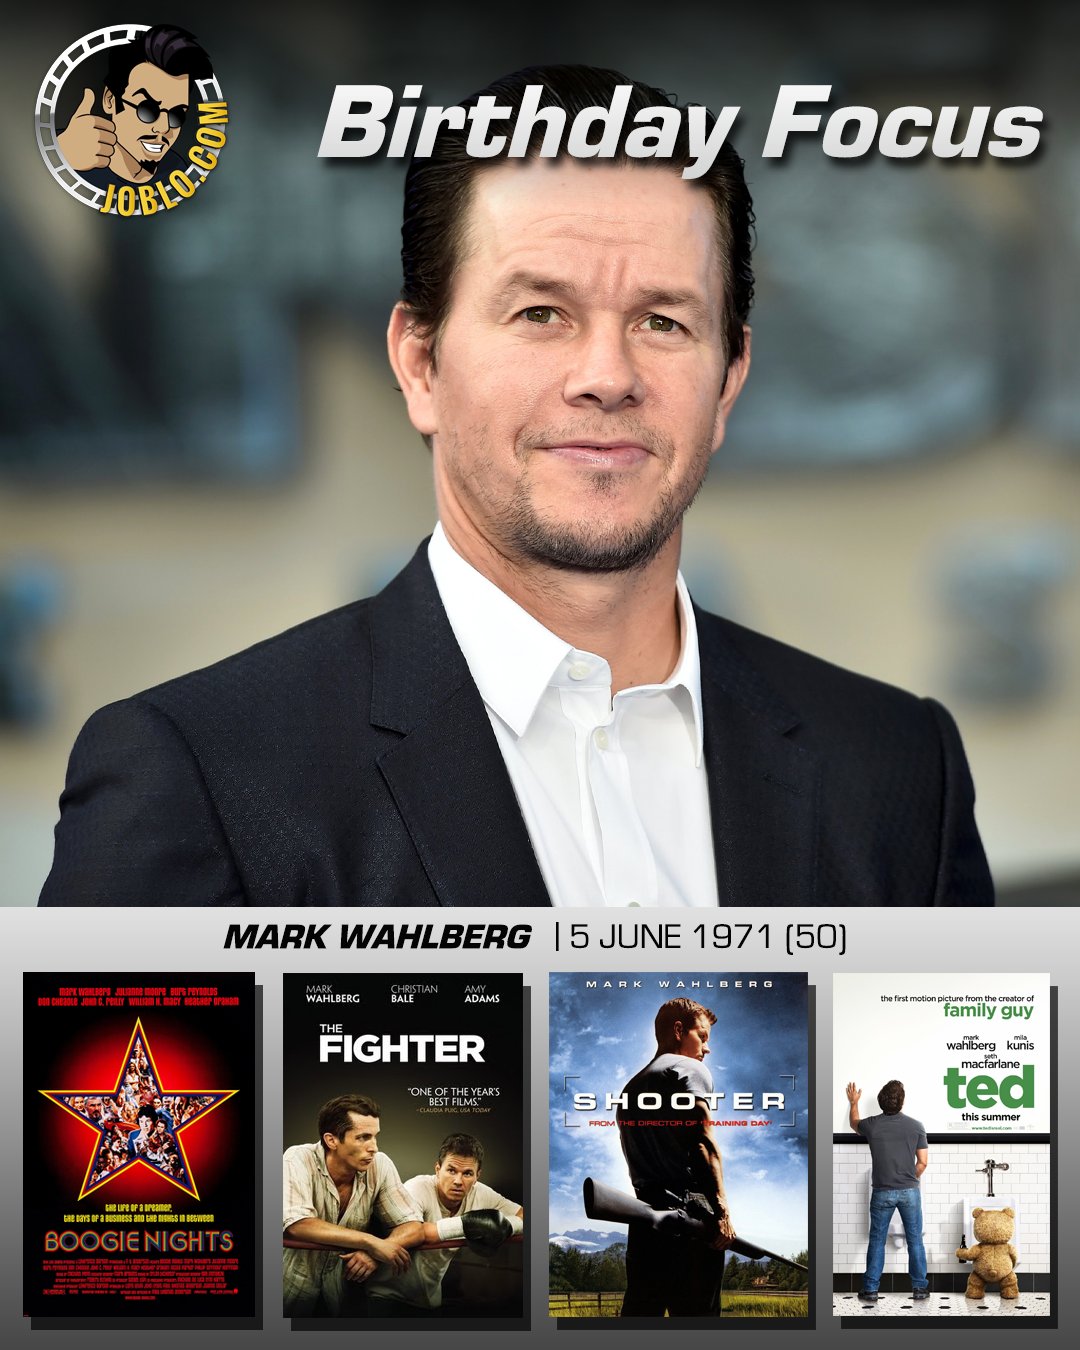 Wishing a very happy 50th birthday to Mark Wahlberg! 